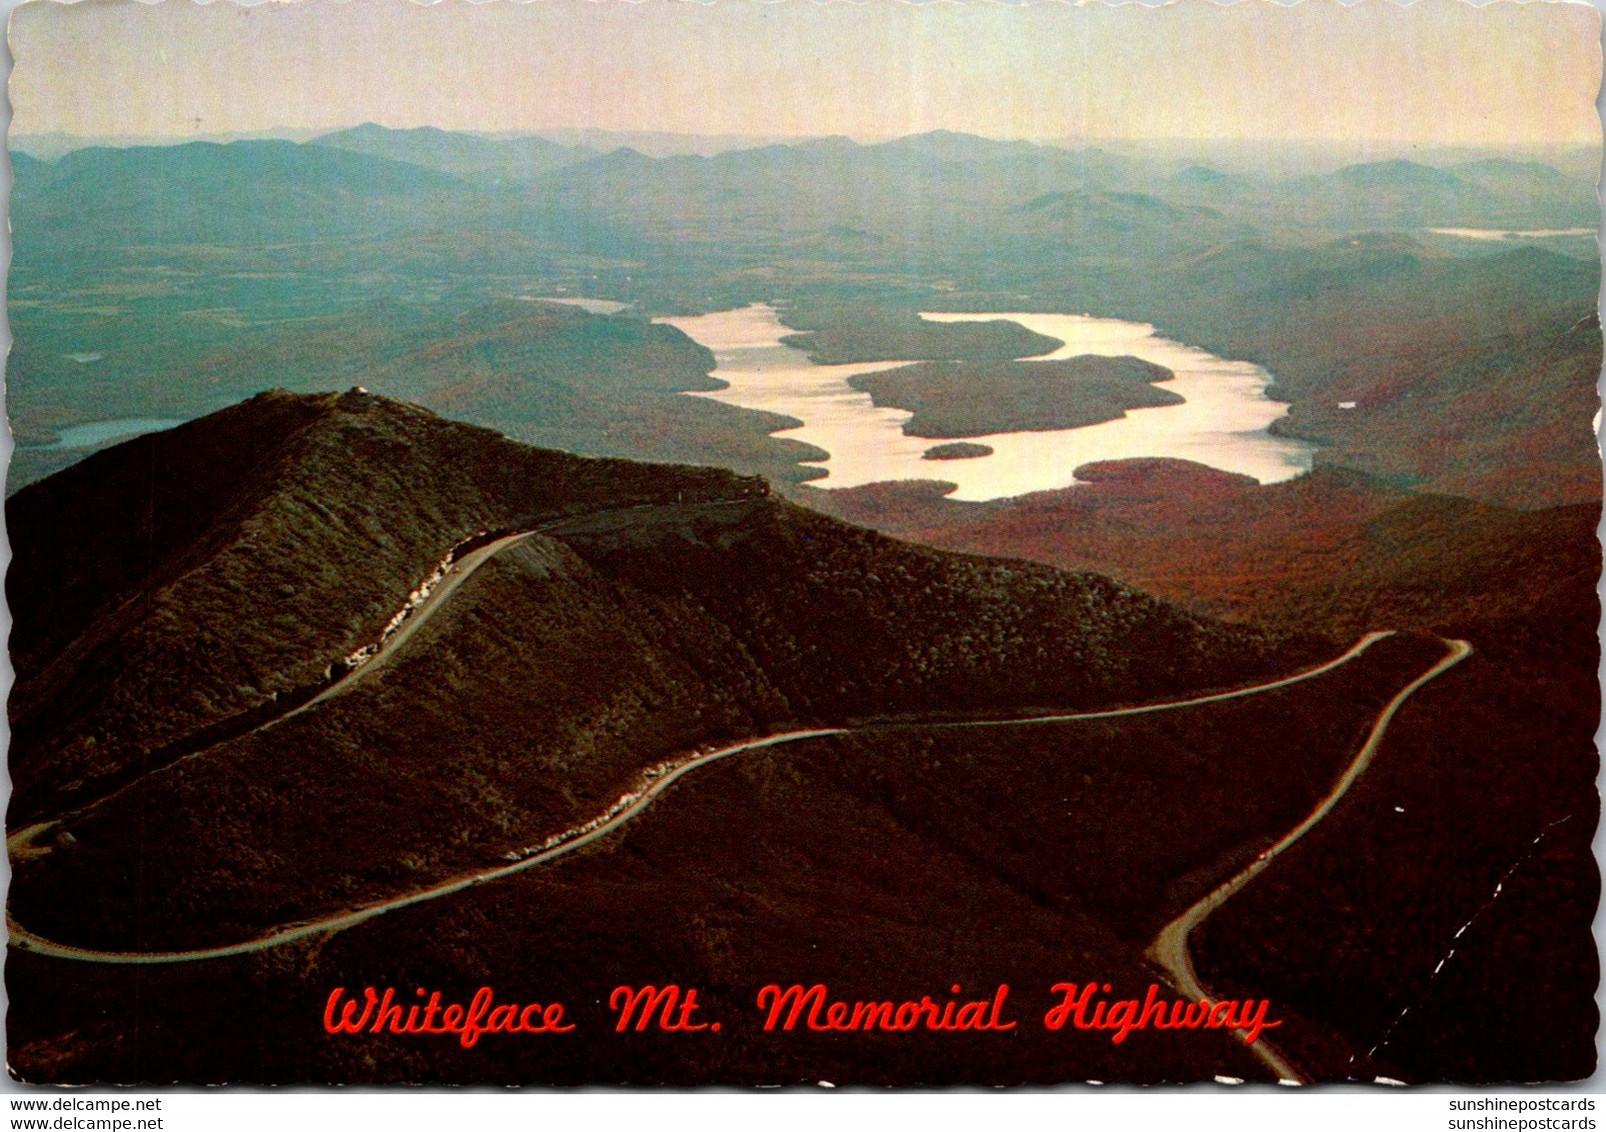 New York Adirondacks Whiteface Mountain Memorial Highway - Adirondack